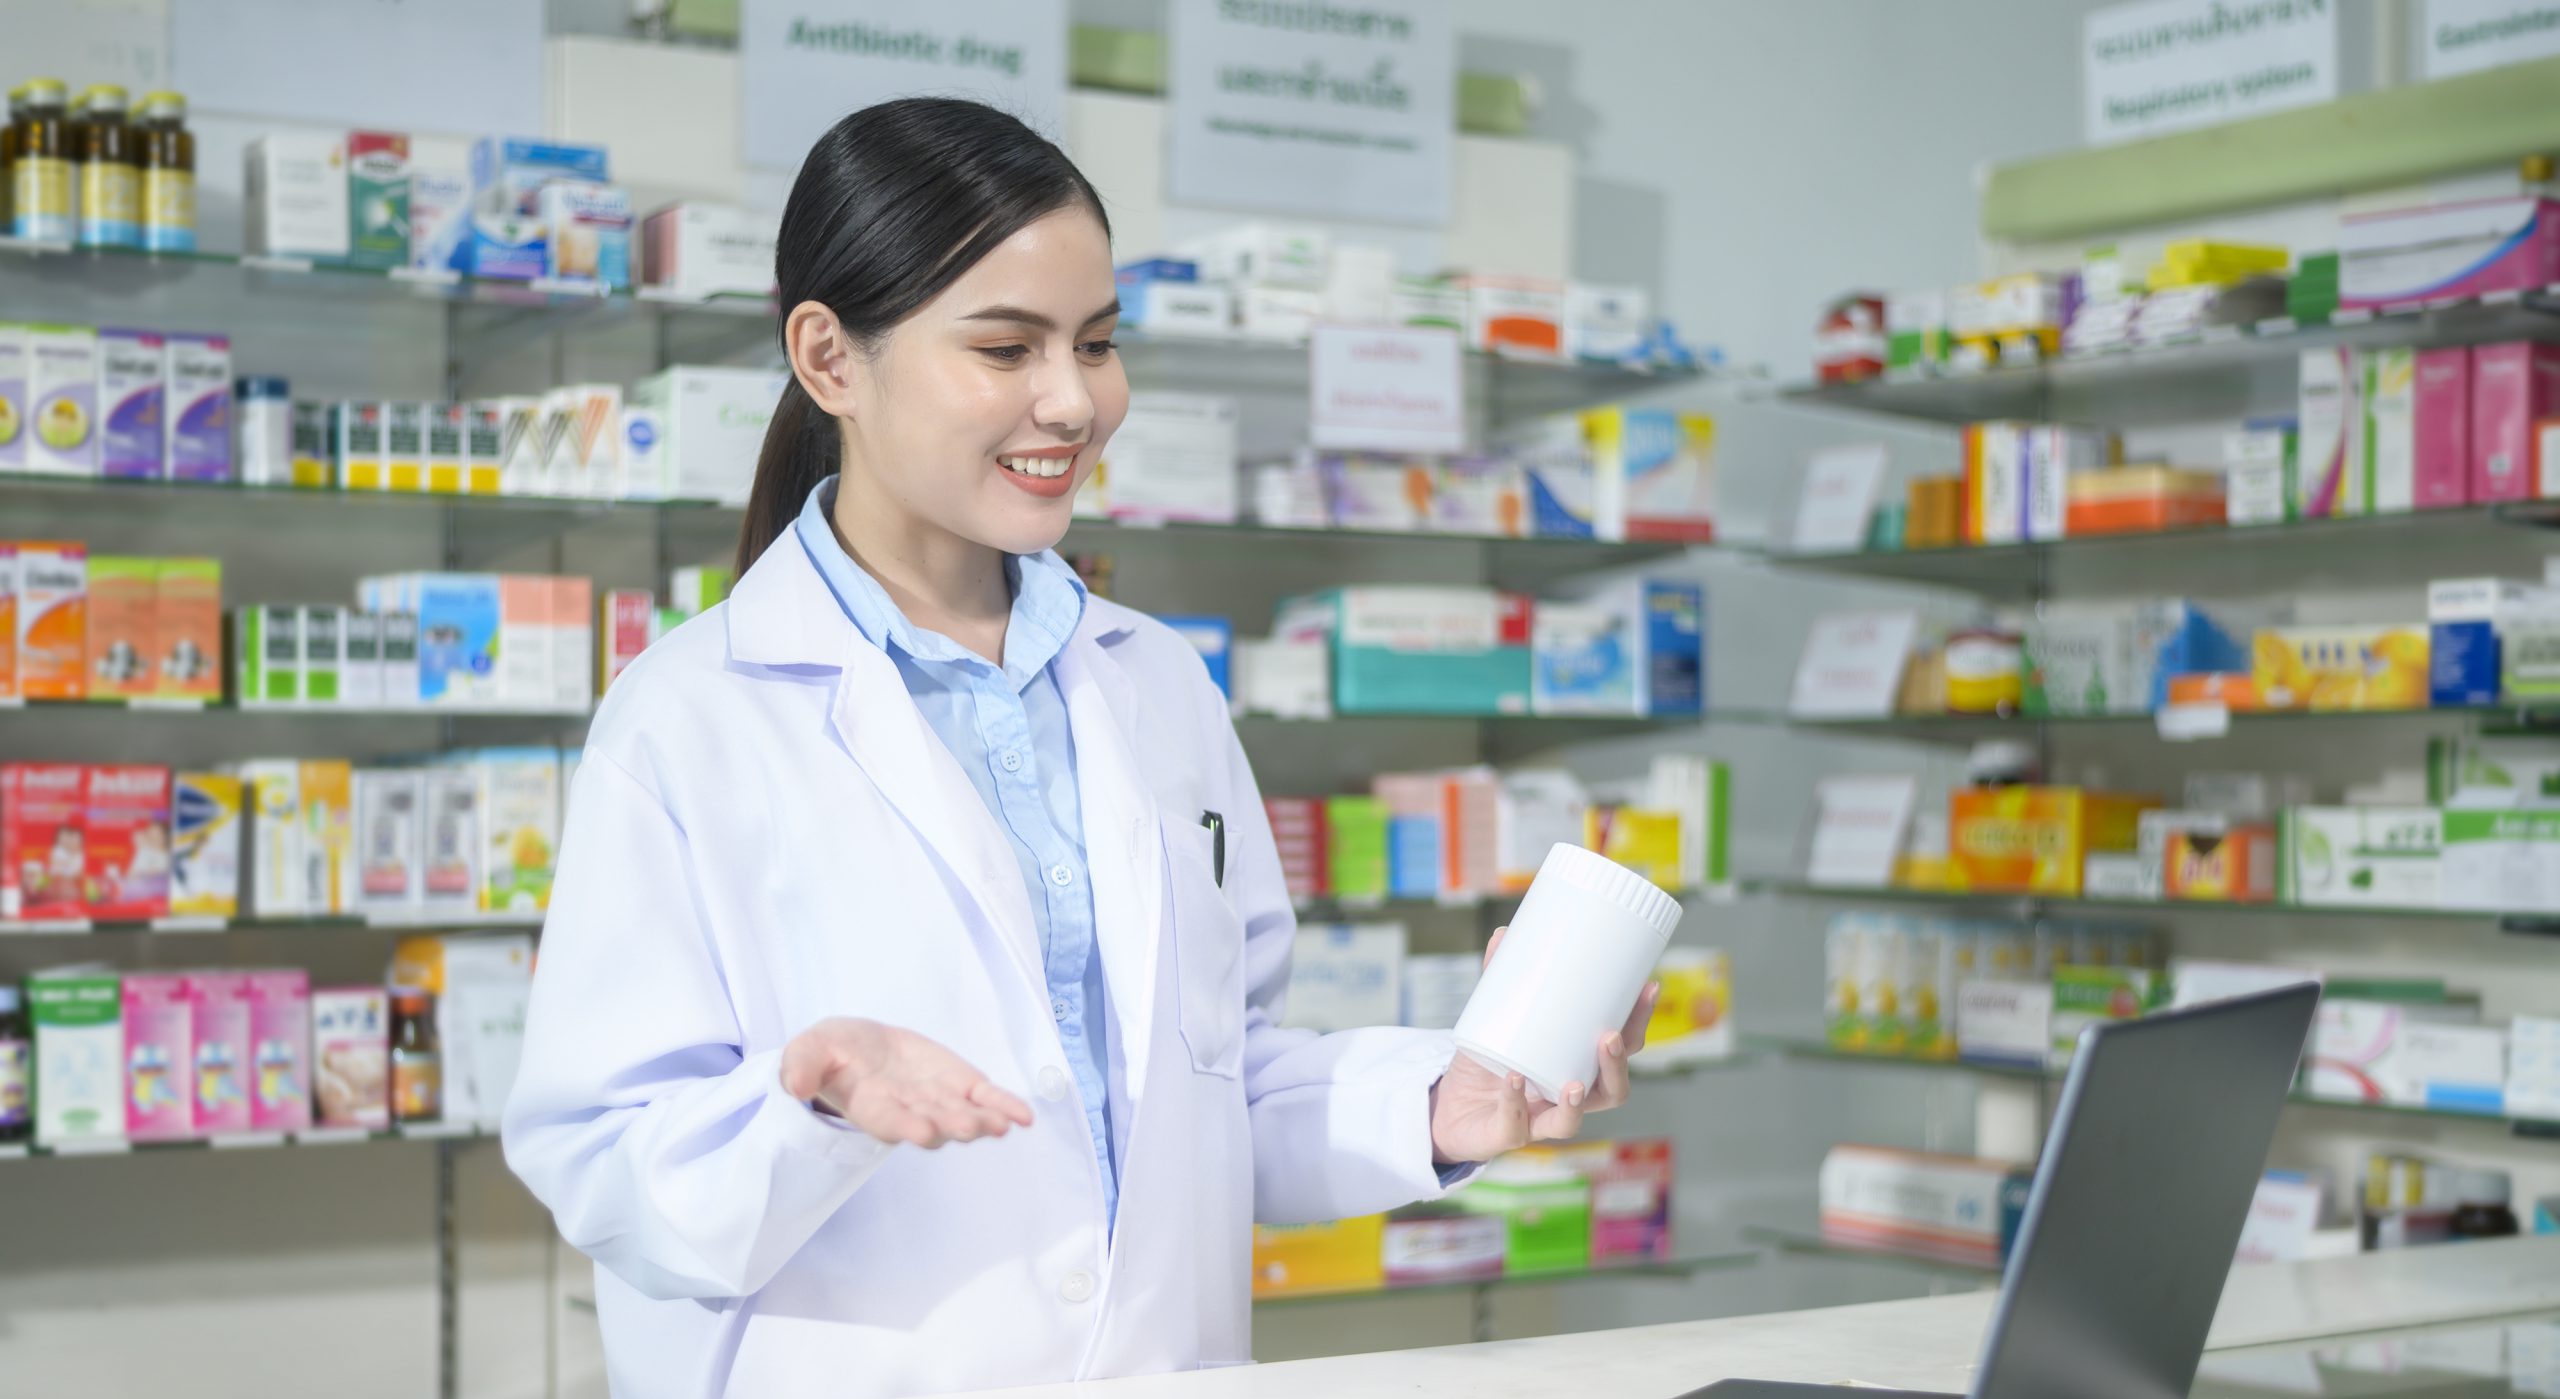 Female pharmacist counseling customer via video call in a modern pharmacy drugstore